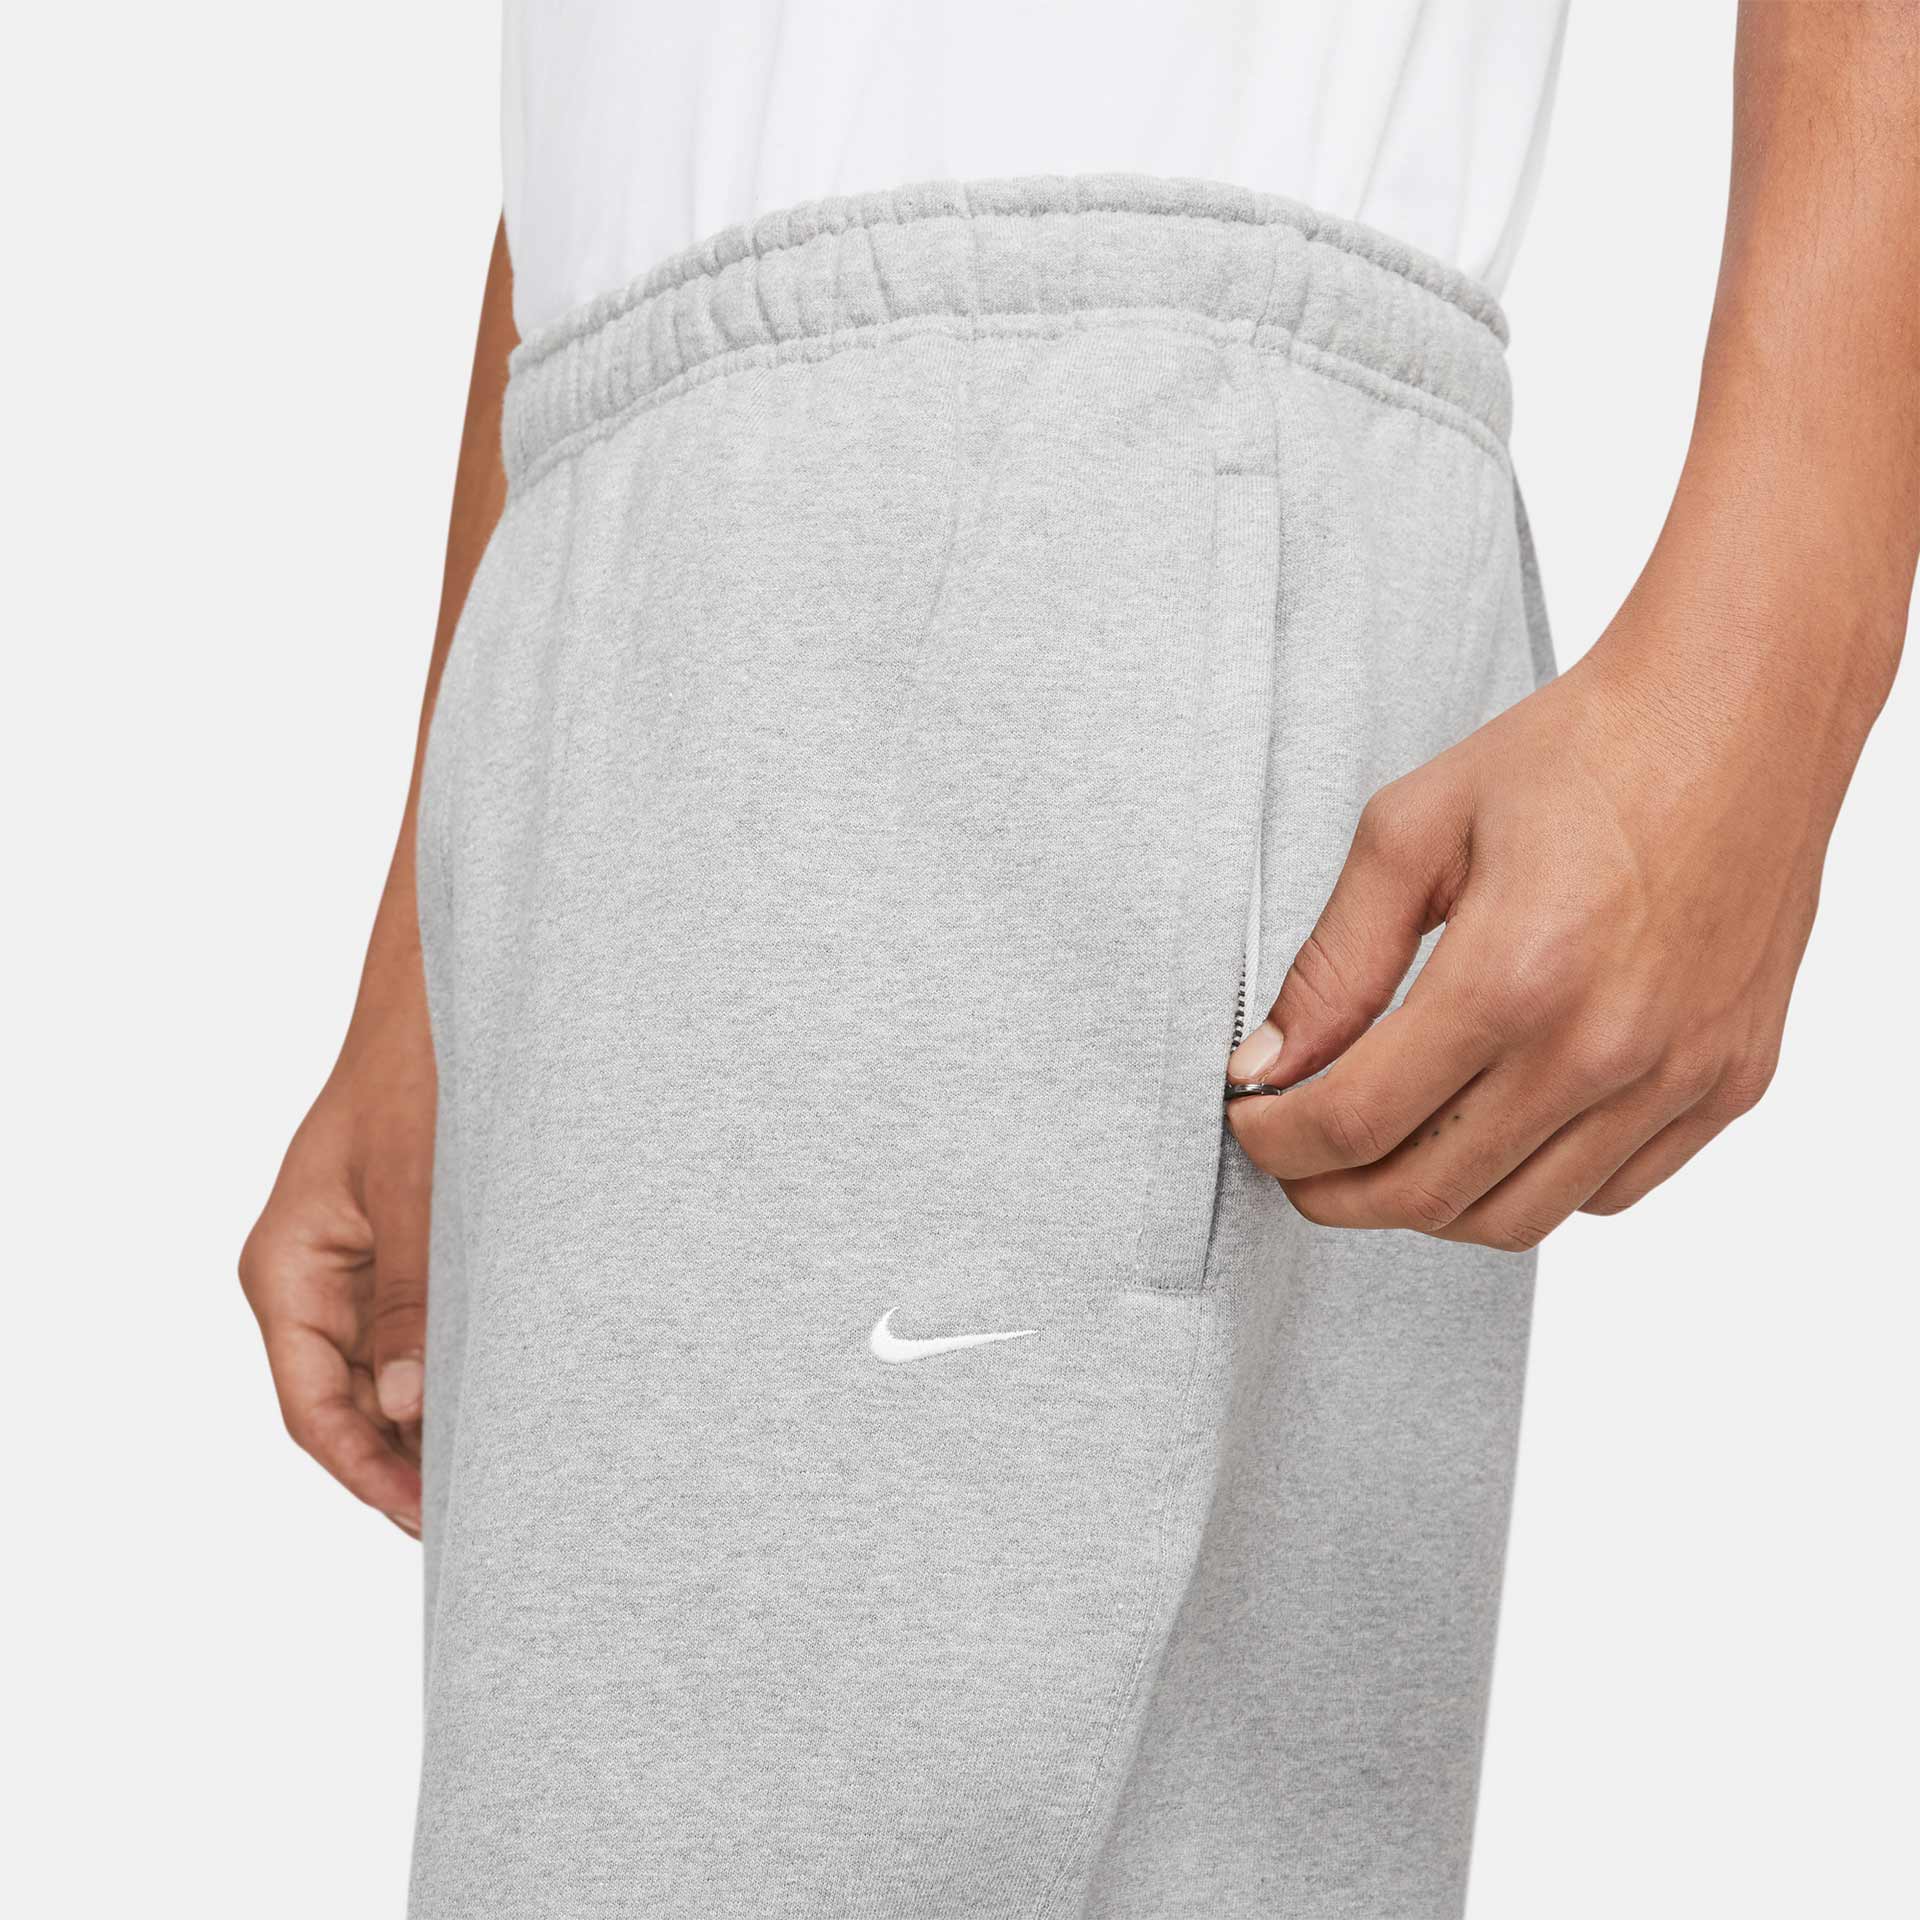 Nike Solo Swoosh Pant grey